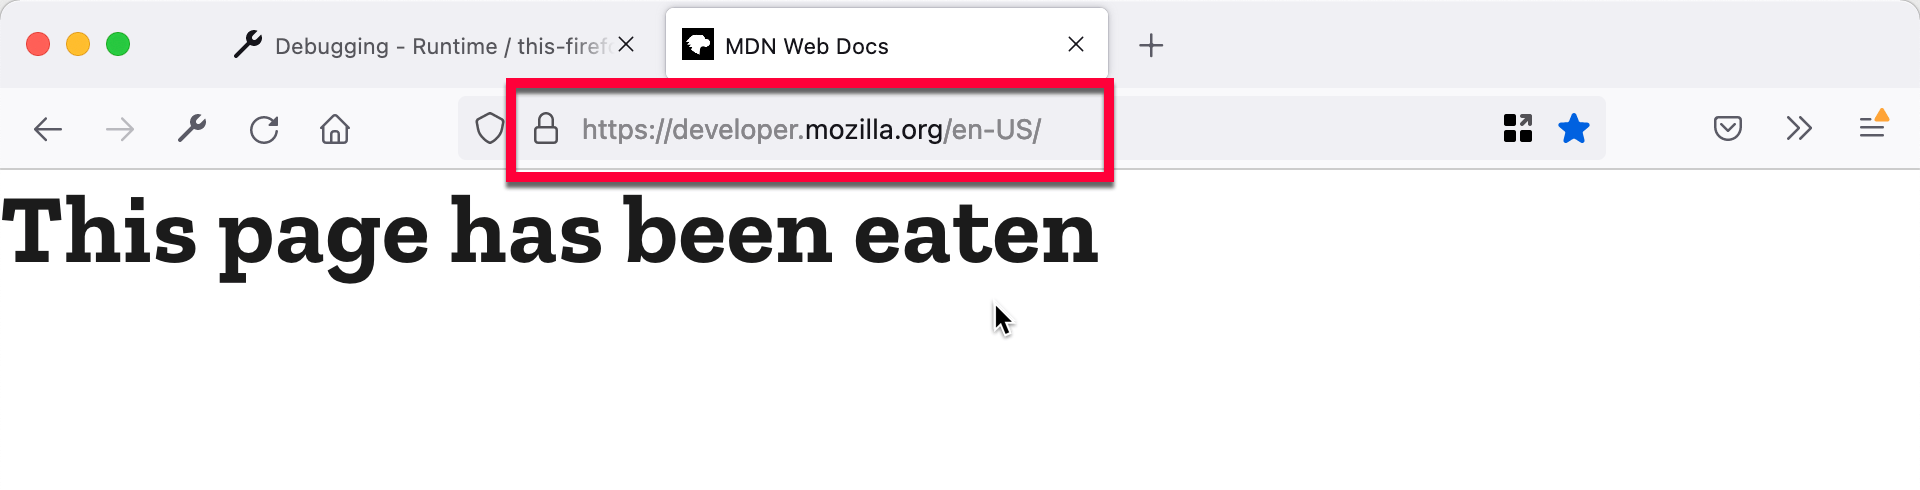 developer.mozilla.org page "eaten" by the script